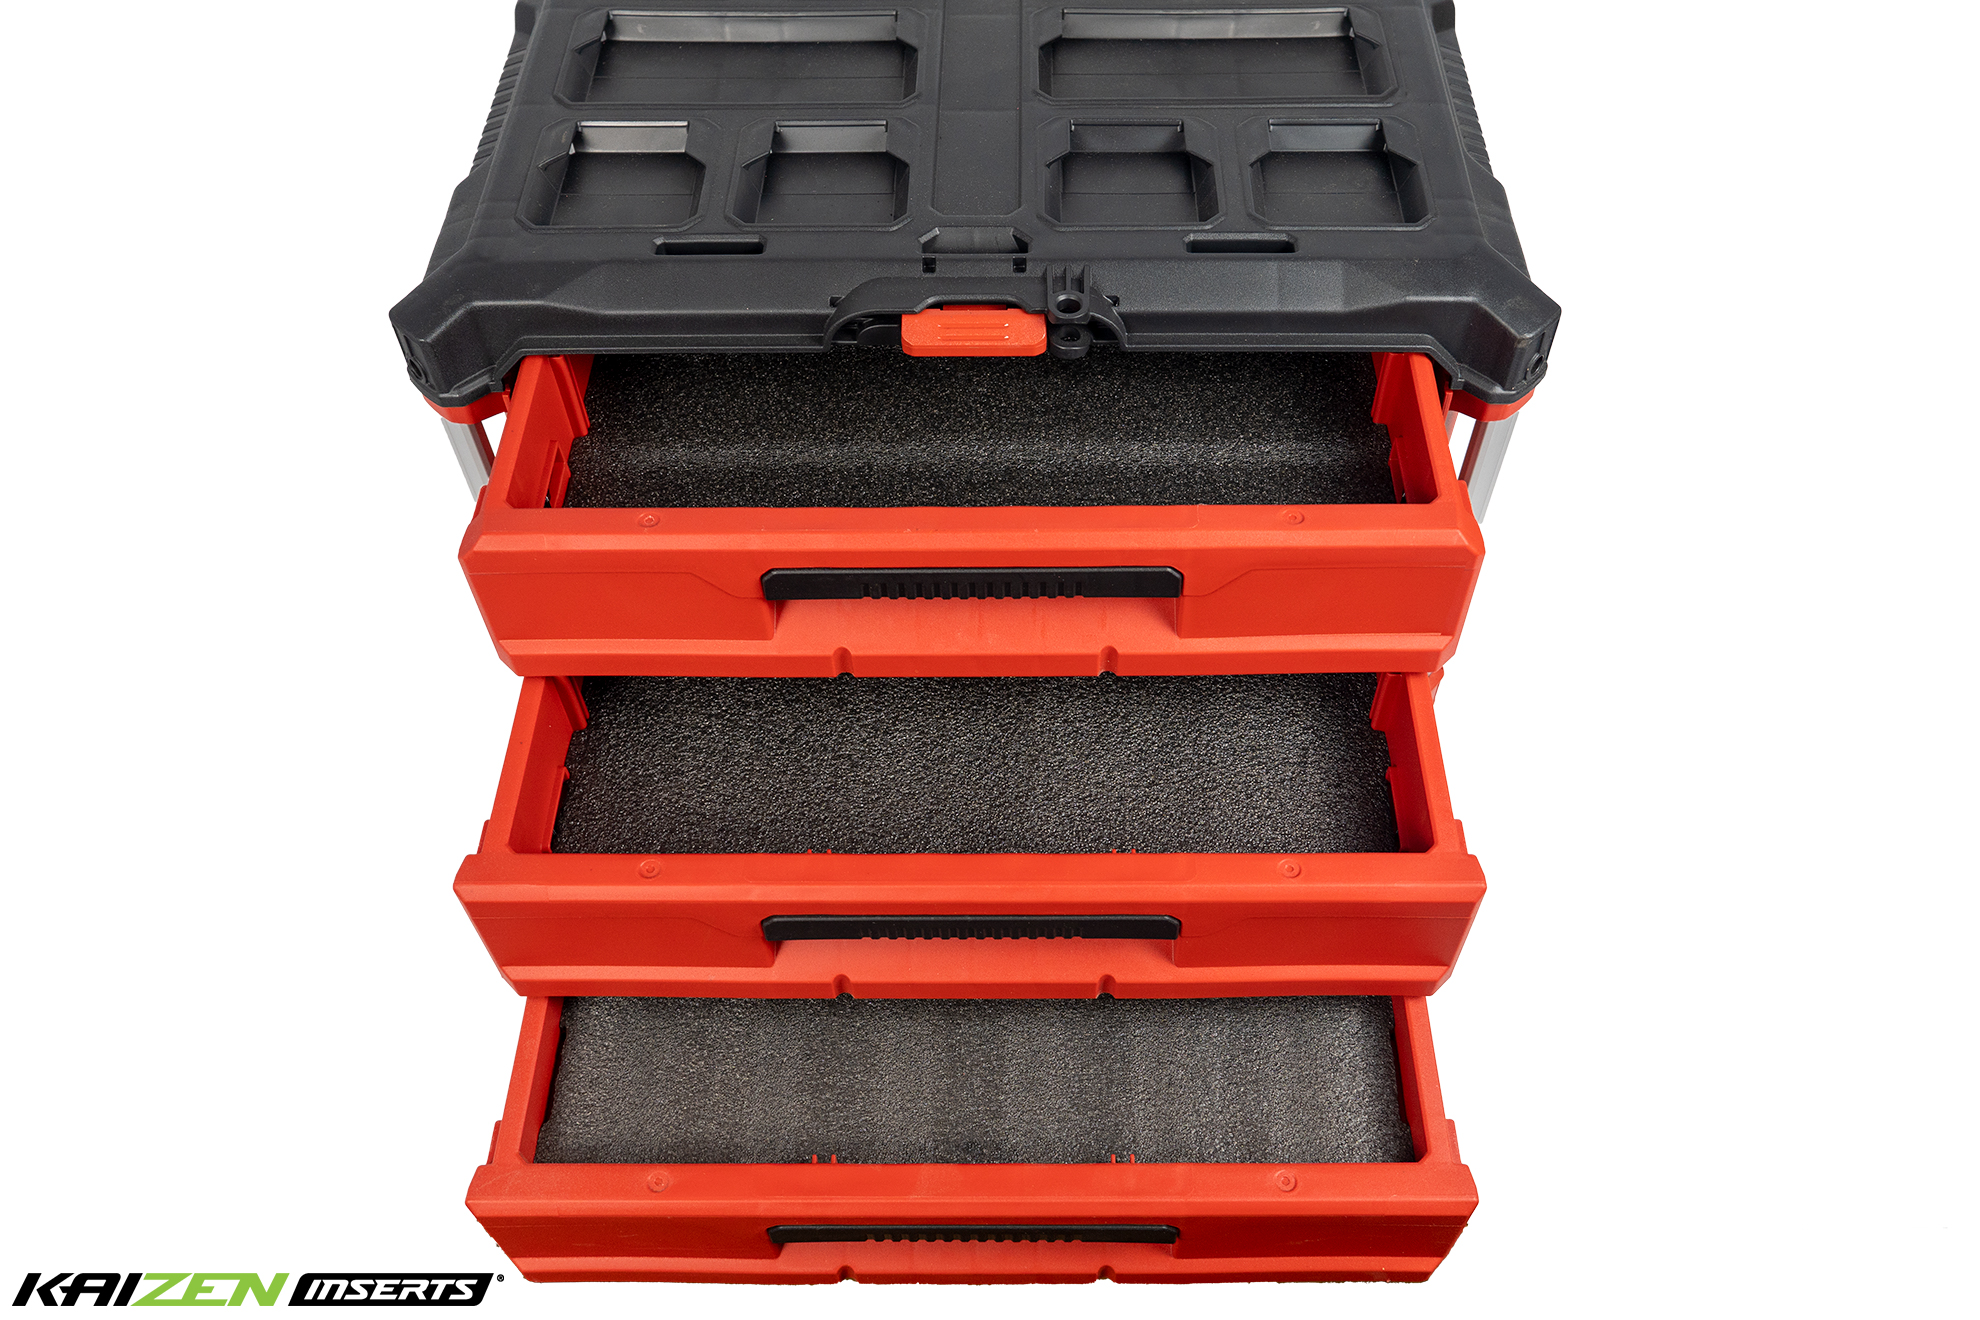 27 Edge Tool Box - Drawer A3 - Customize Drawer Foam Inserts